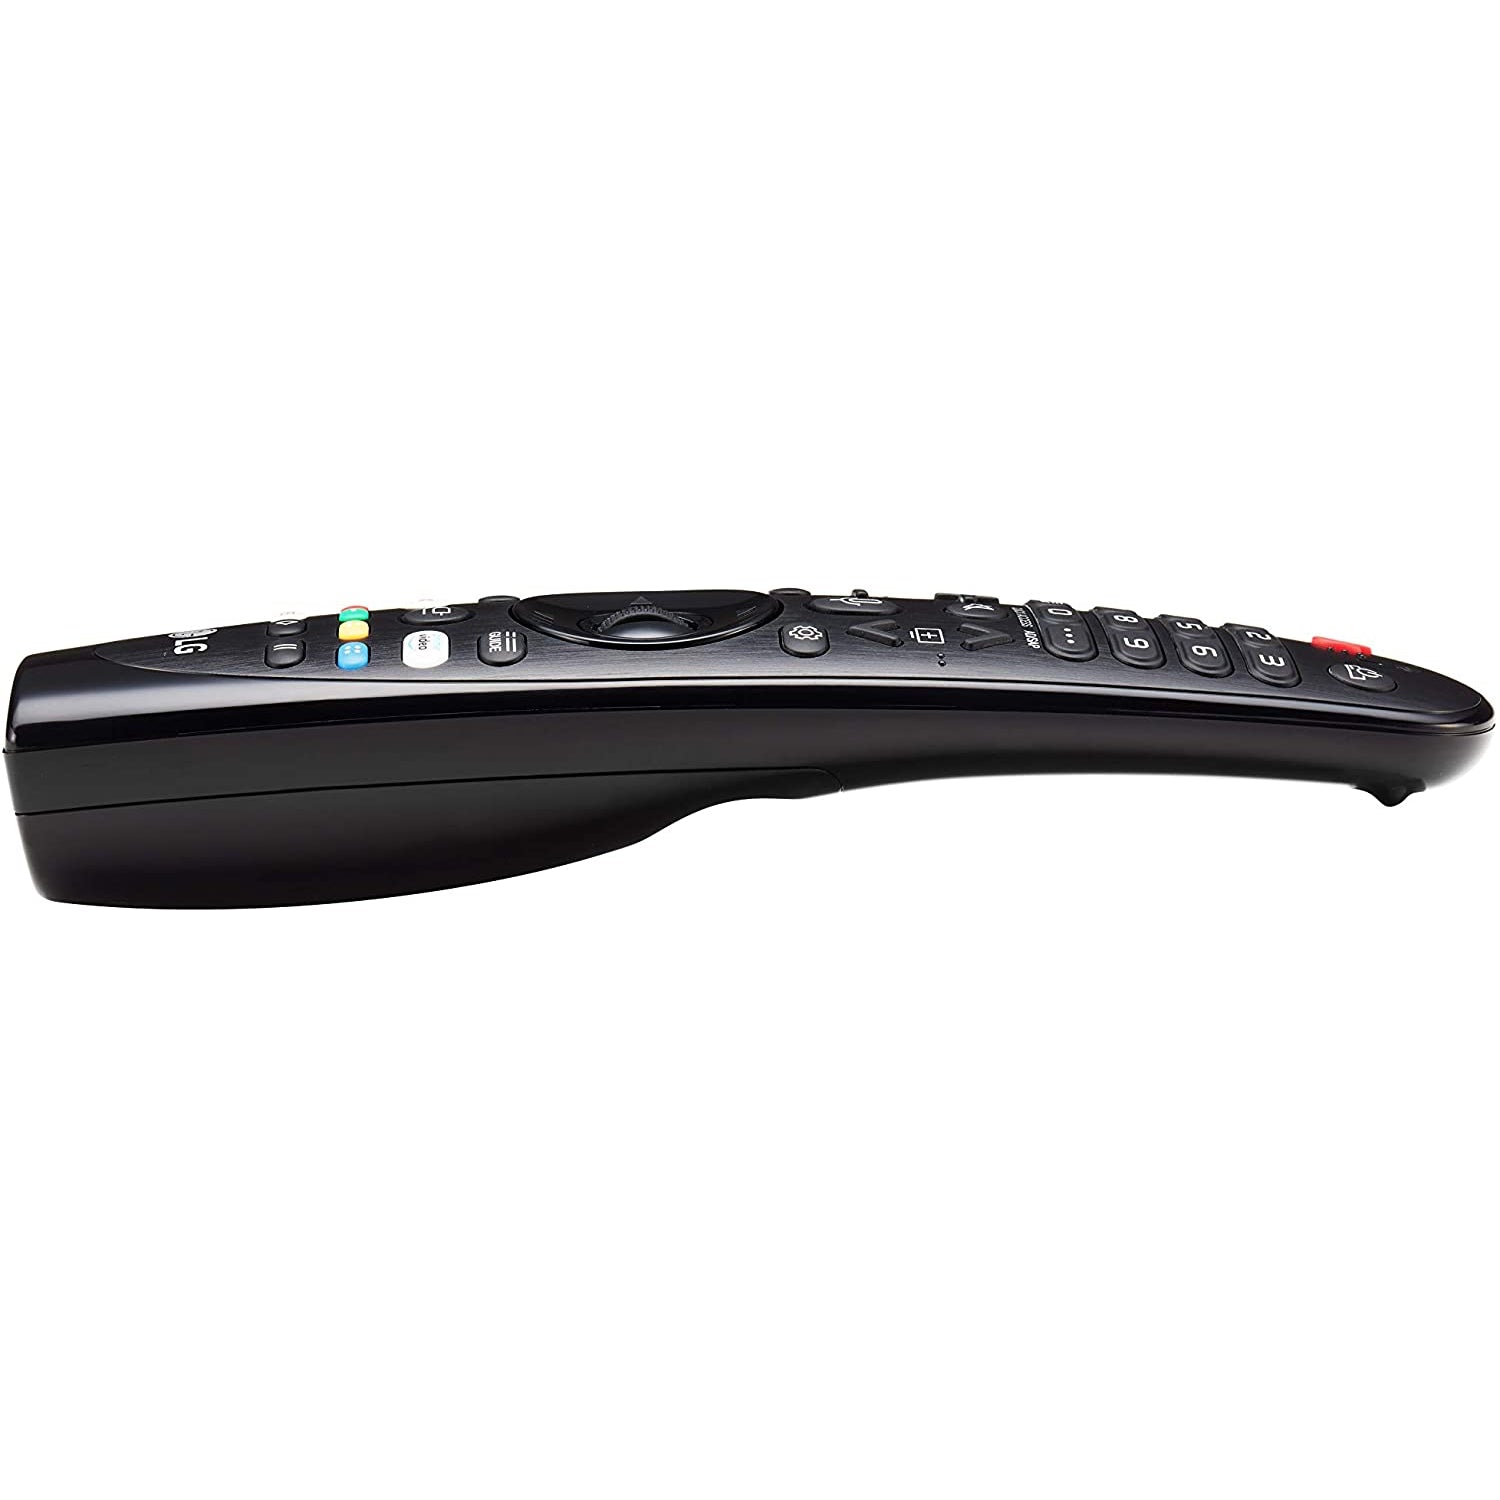 LG Magic Remote 2020 - AN-MR20GA , Black